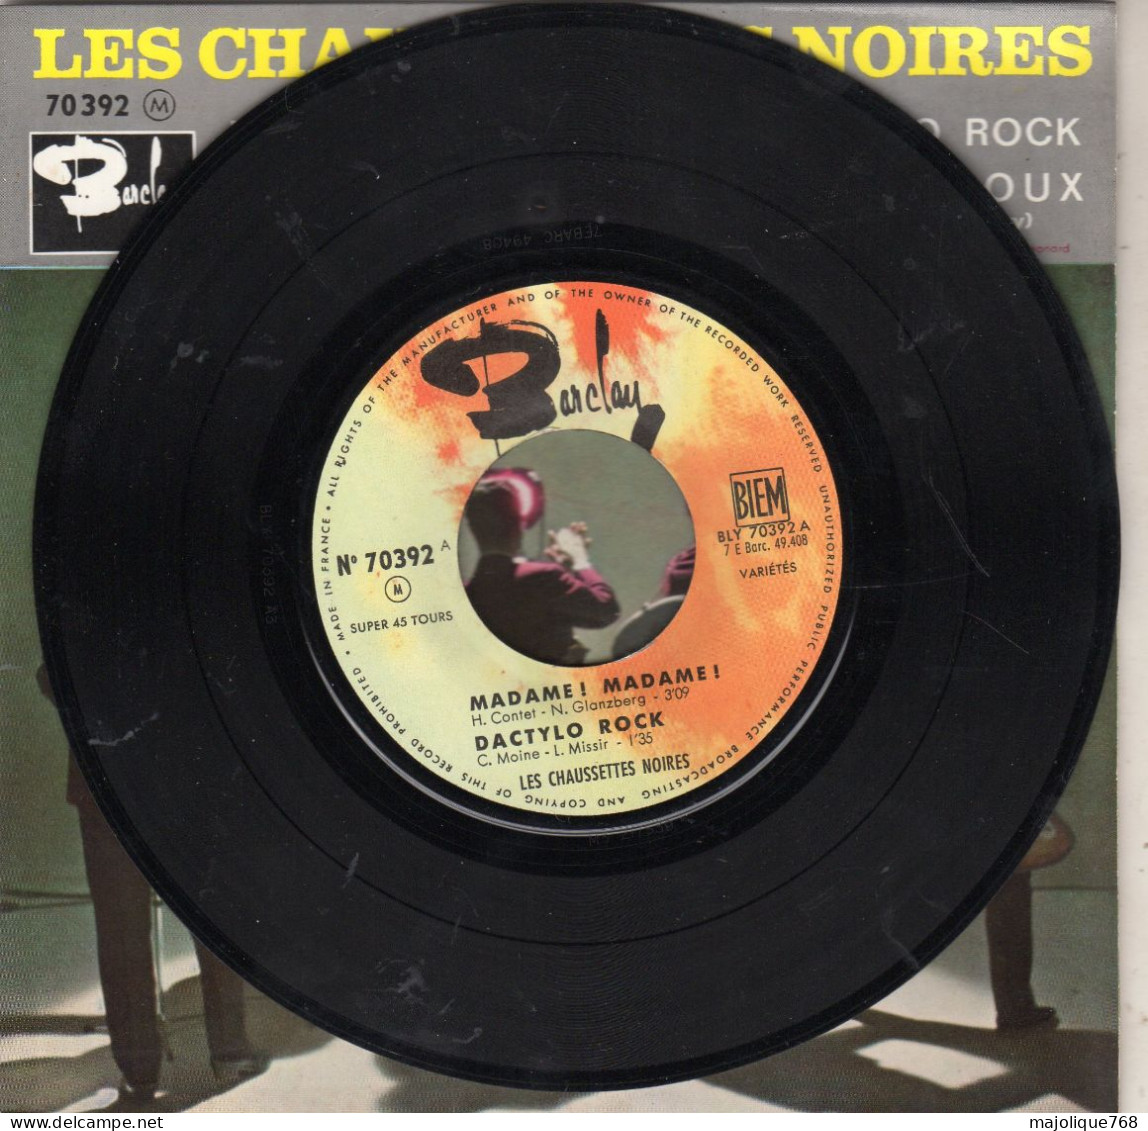 Disque - Les Chaussettes Noirs - Madame! Madame! - Barclay 70 392 France 1961 - Rock